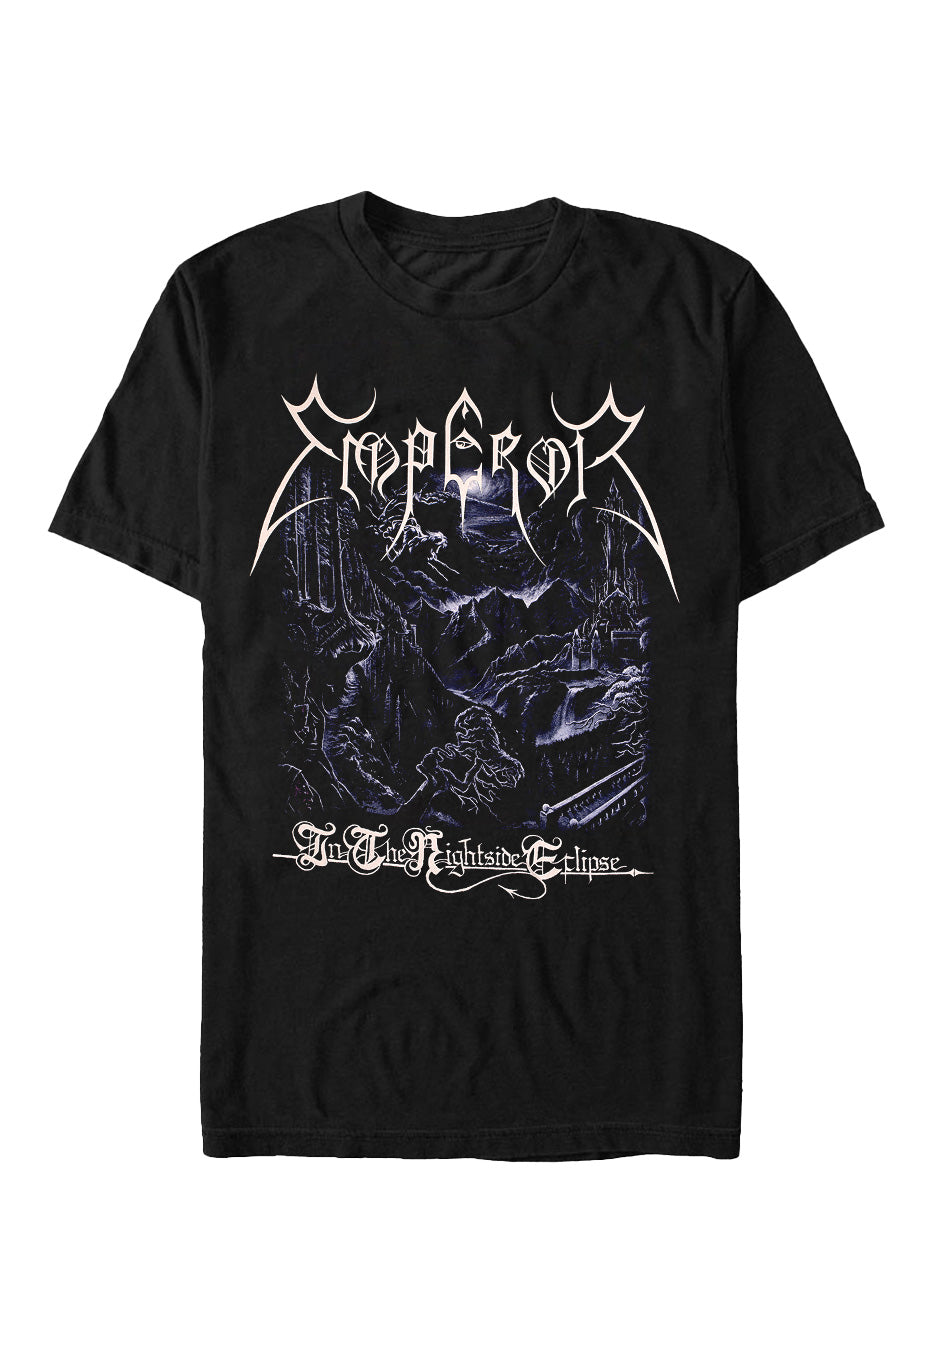 Emperor - In The Nightslide Eclipse - T-Shirt